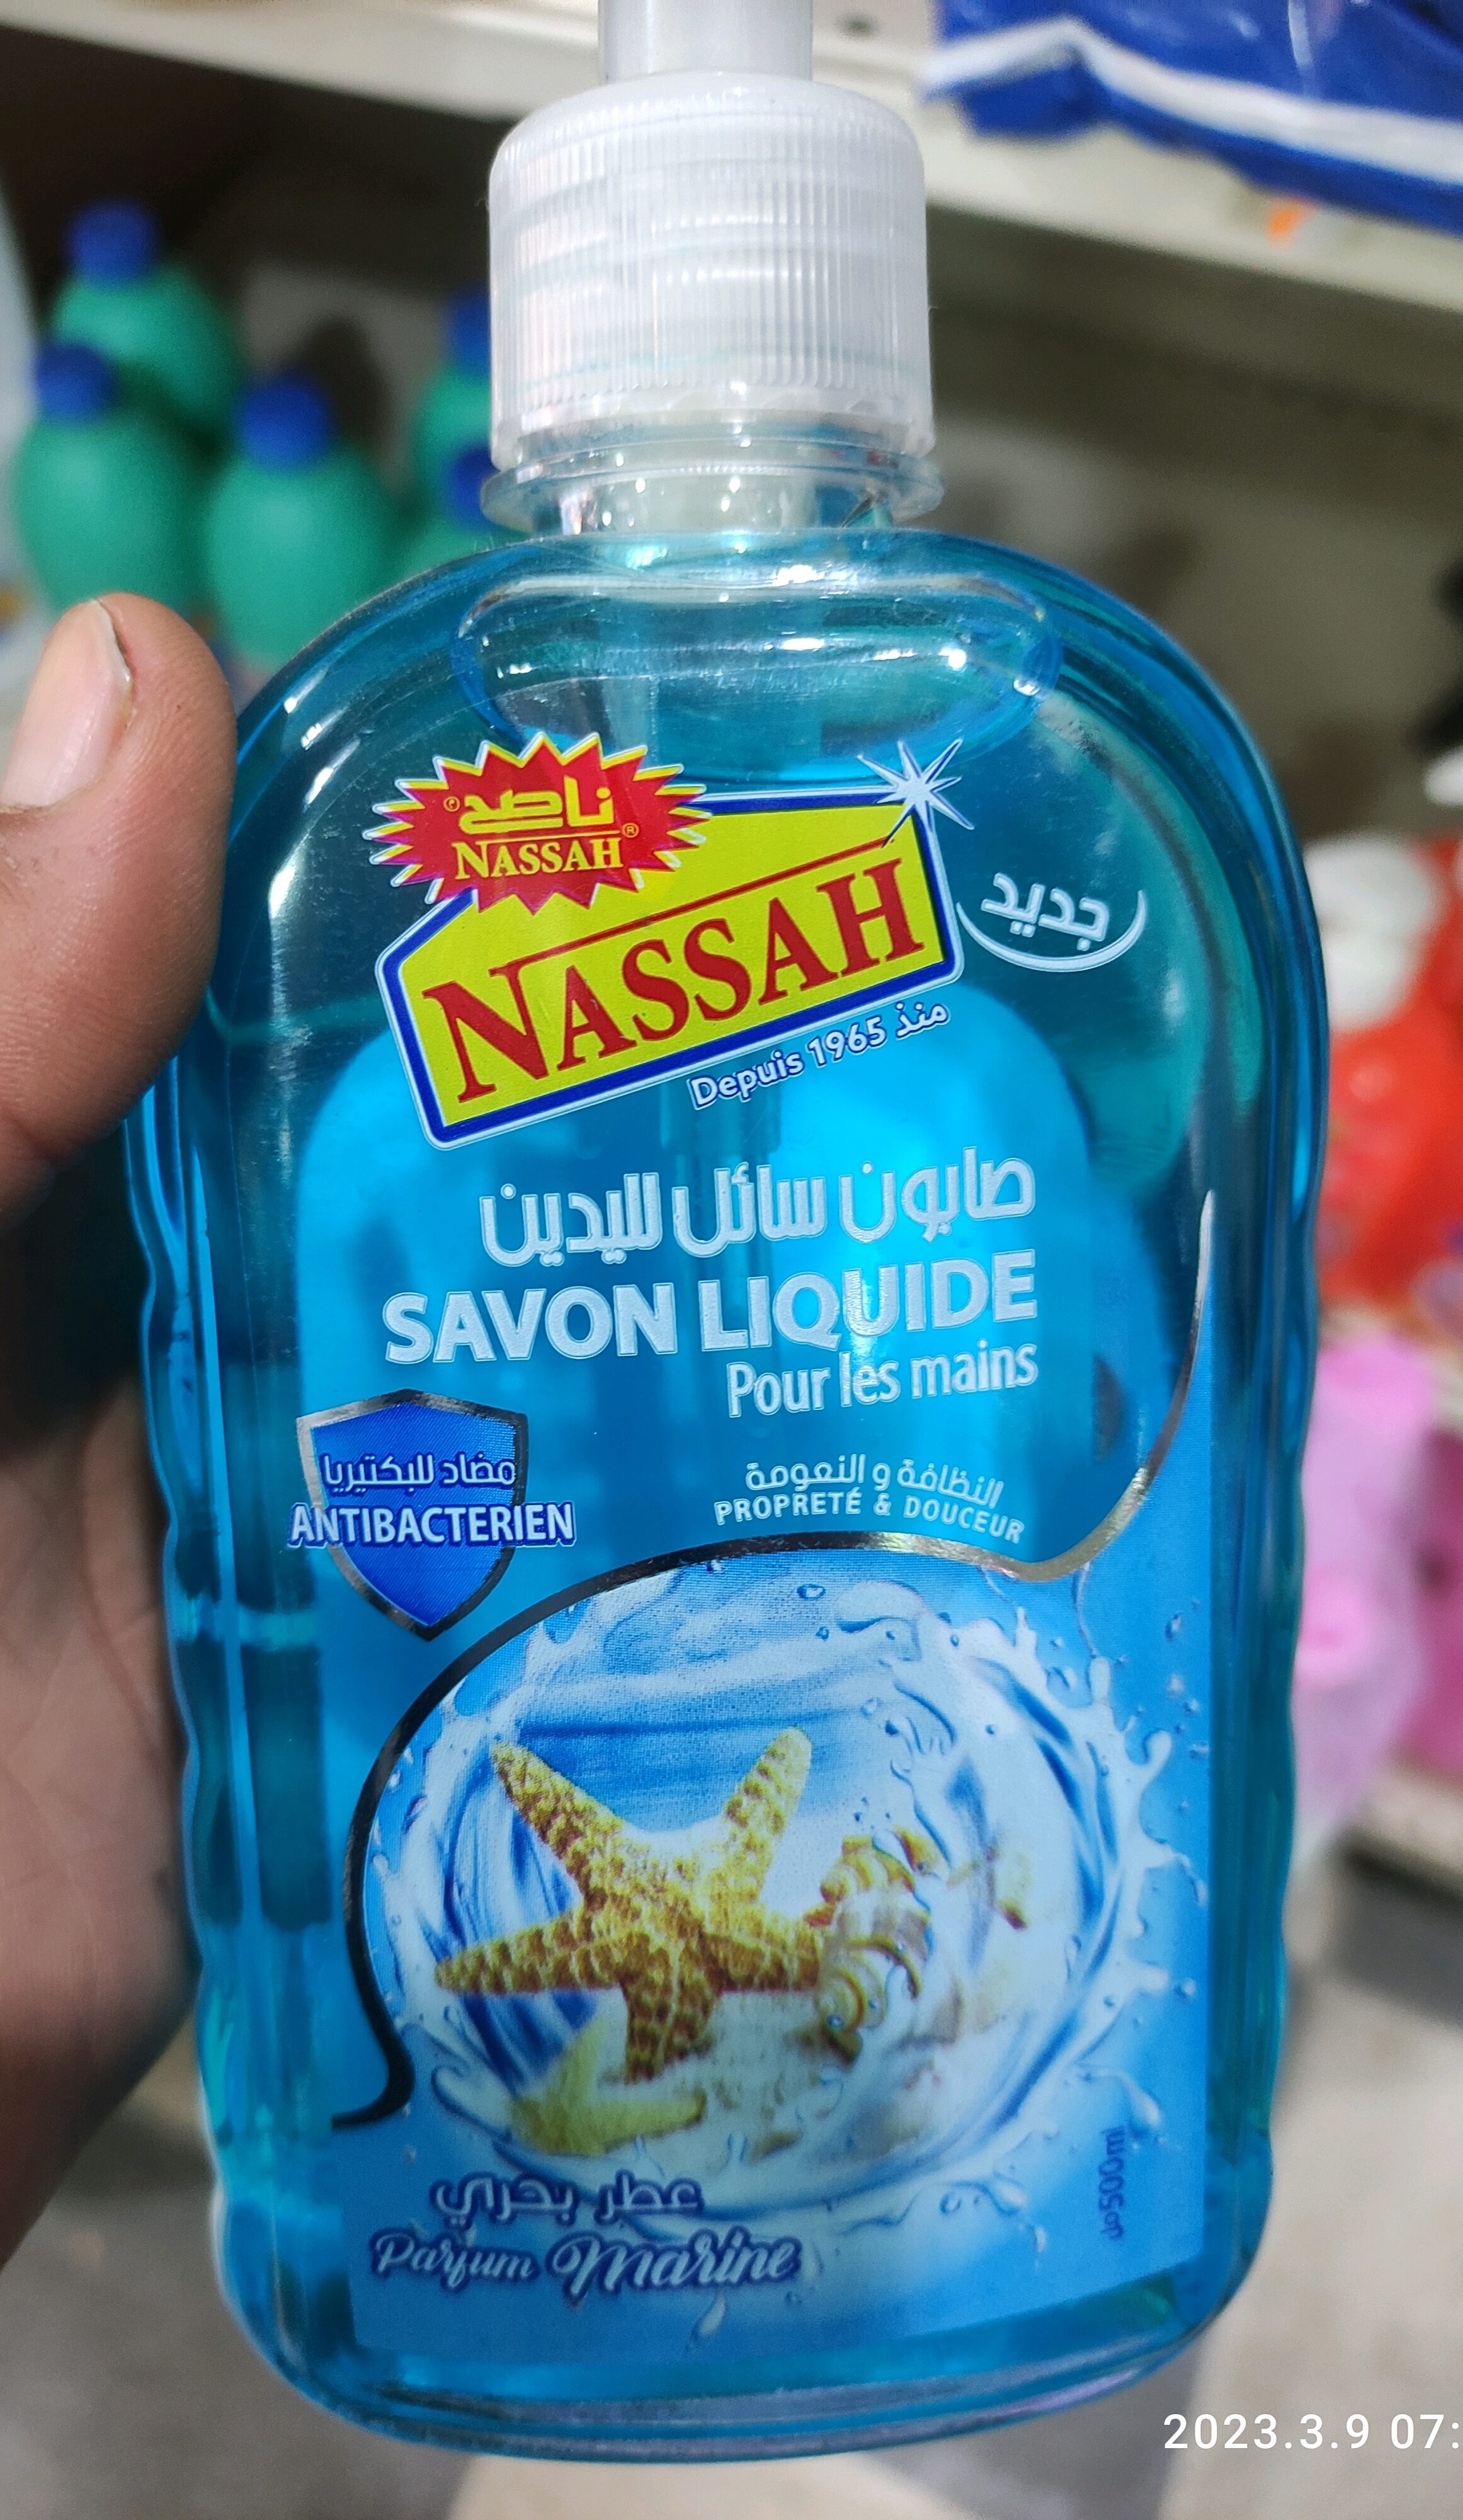 savon liquid - Product - en